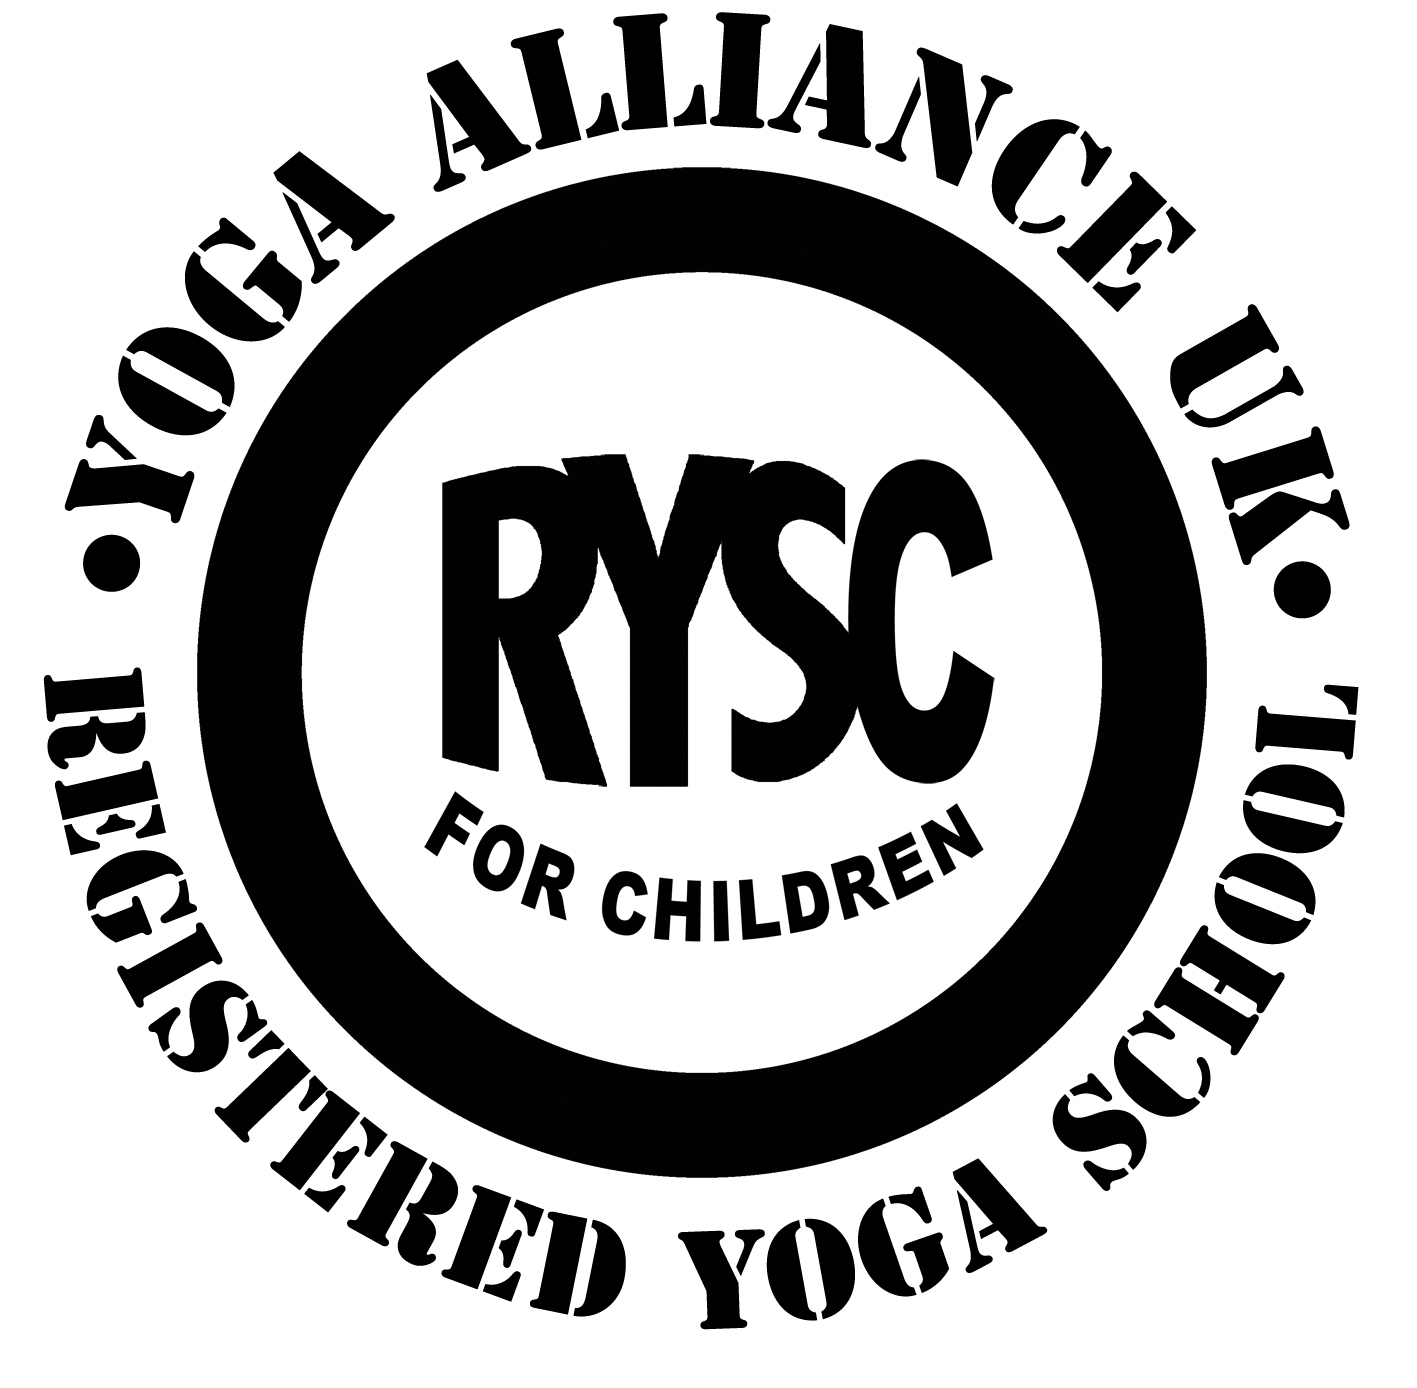 Yoga Alliance Registered Yoga School